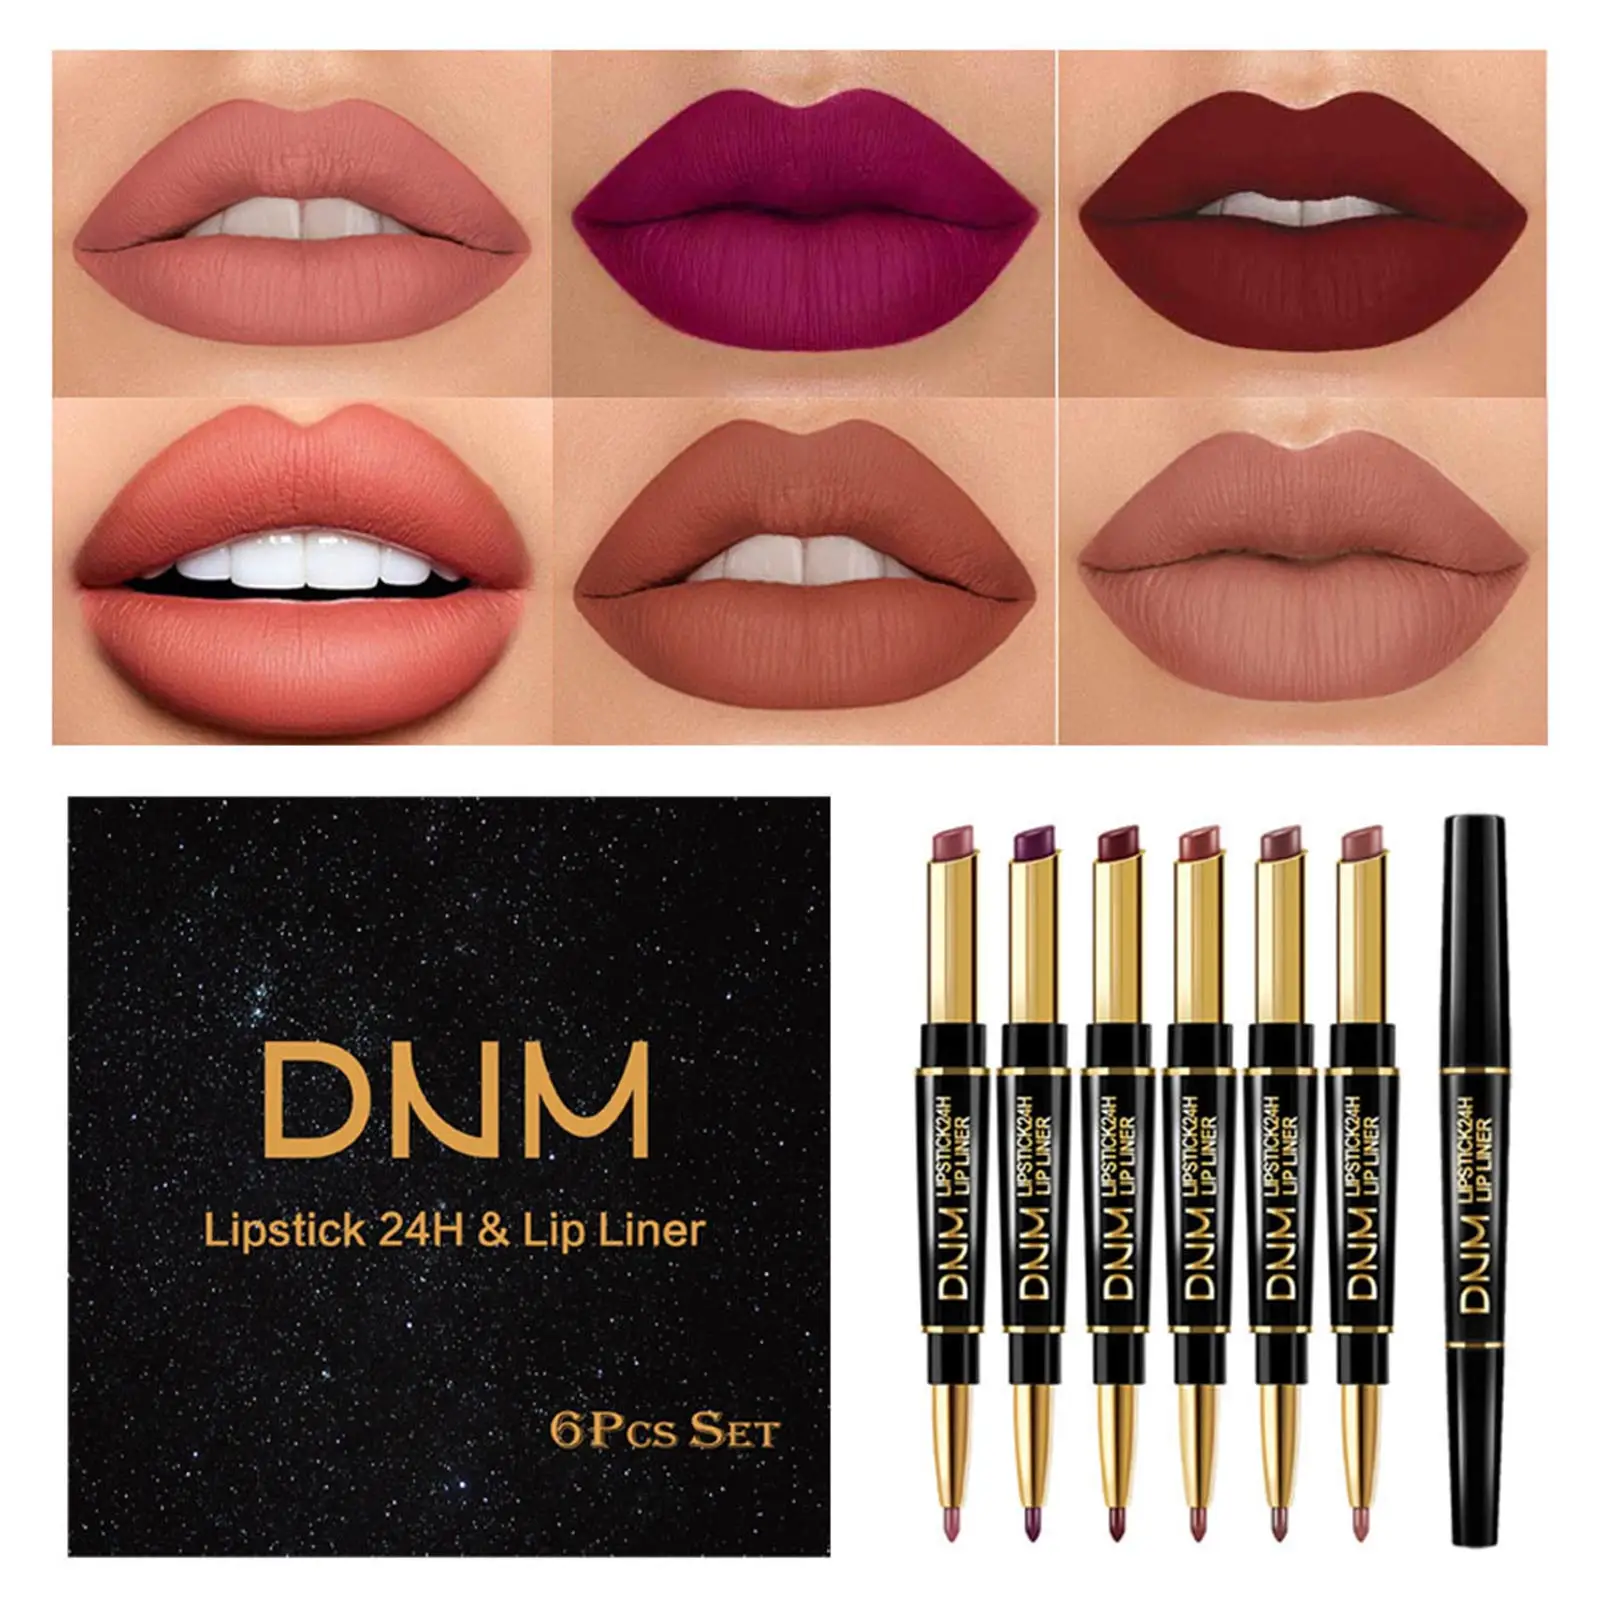 

6 Lipstick Lip Liner Set 2 In 1 Matte Lipstick Pencil Double Ended Lipsticks High Pigmented Velvet Lipgloss Kit Non-Stick Cup